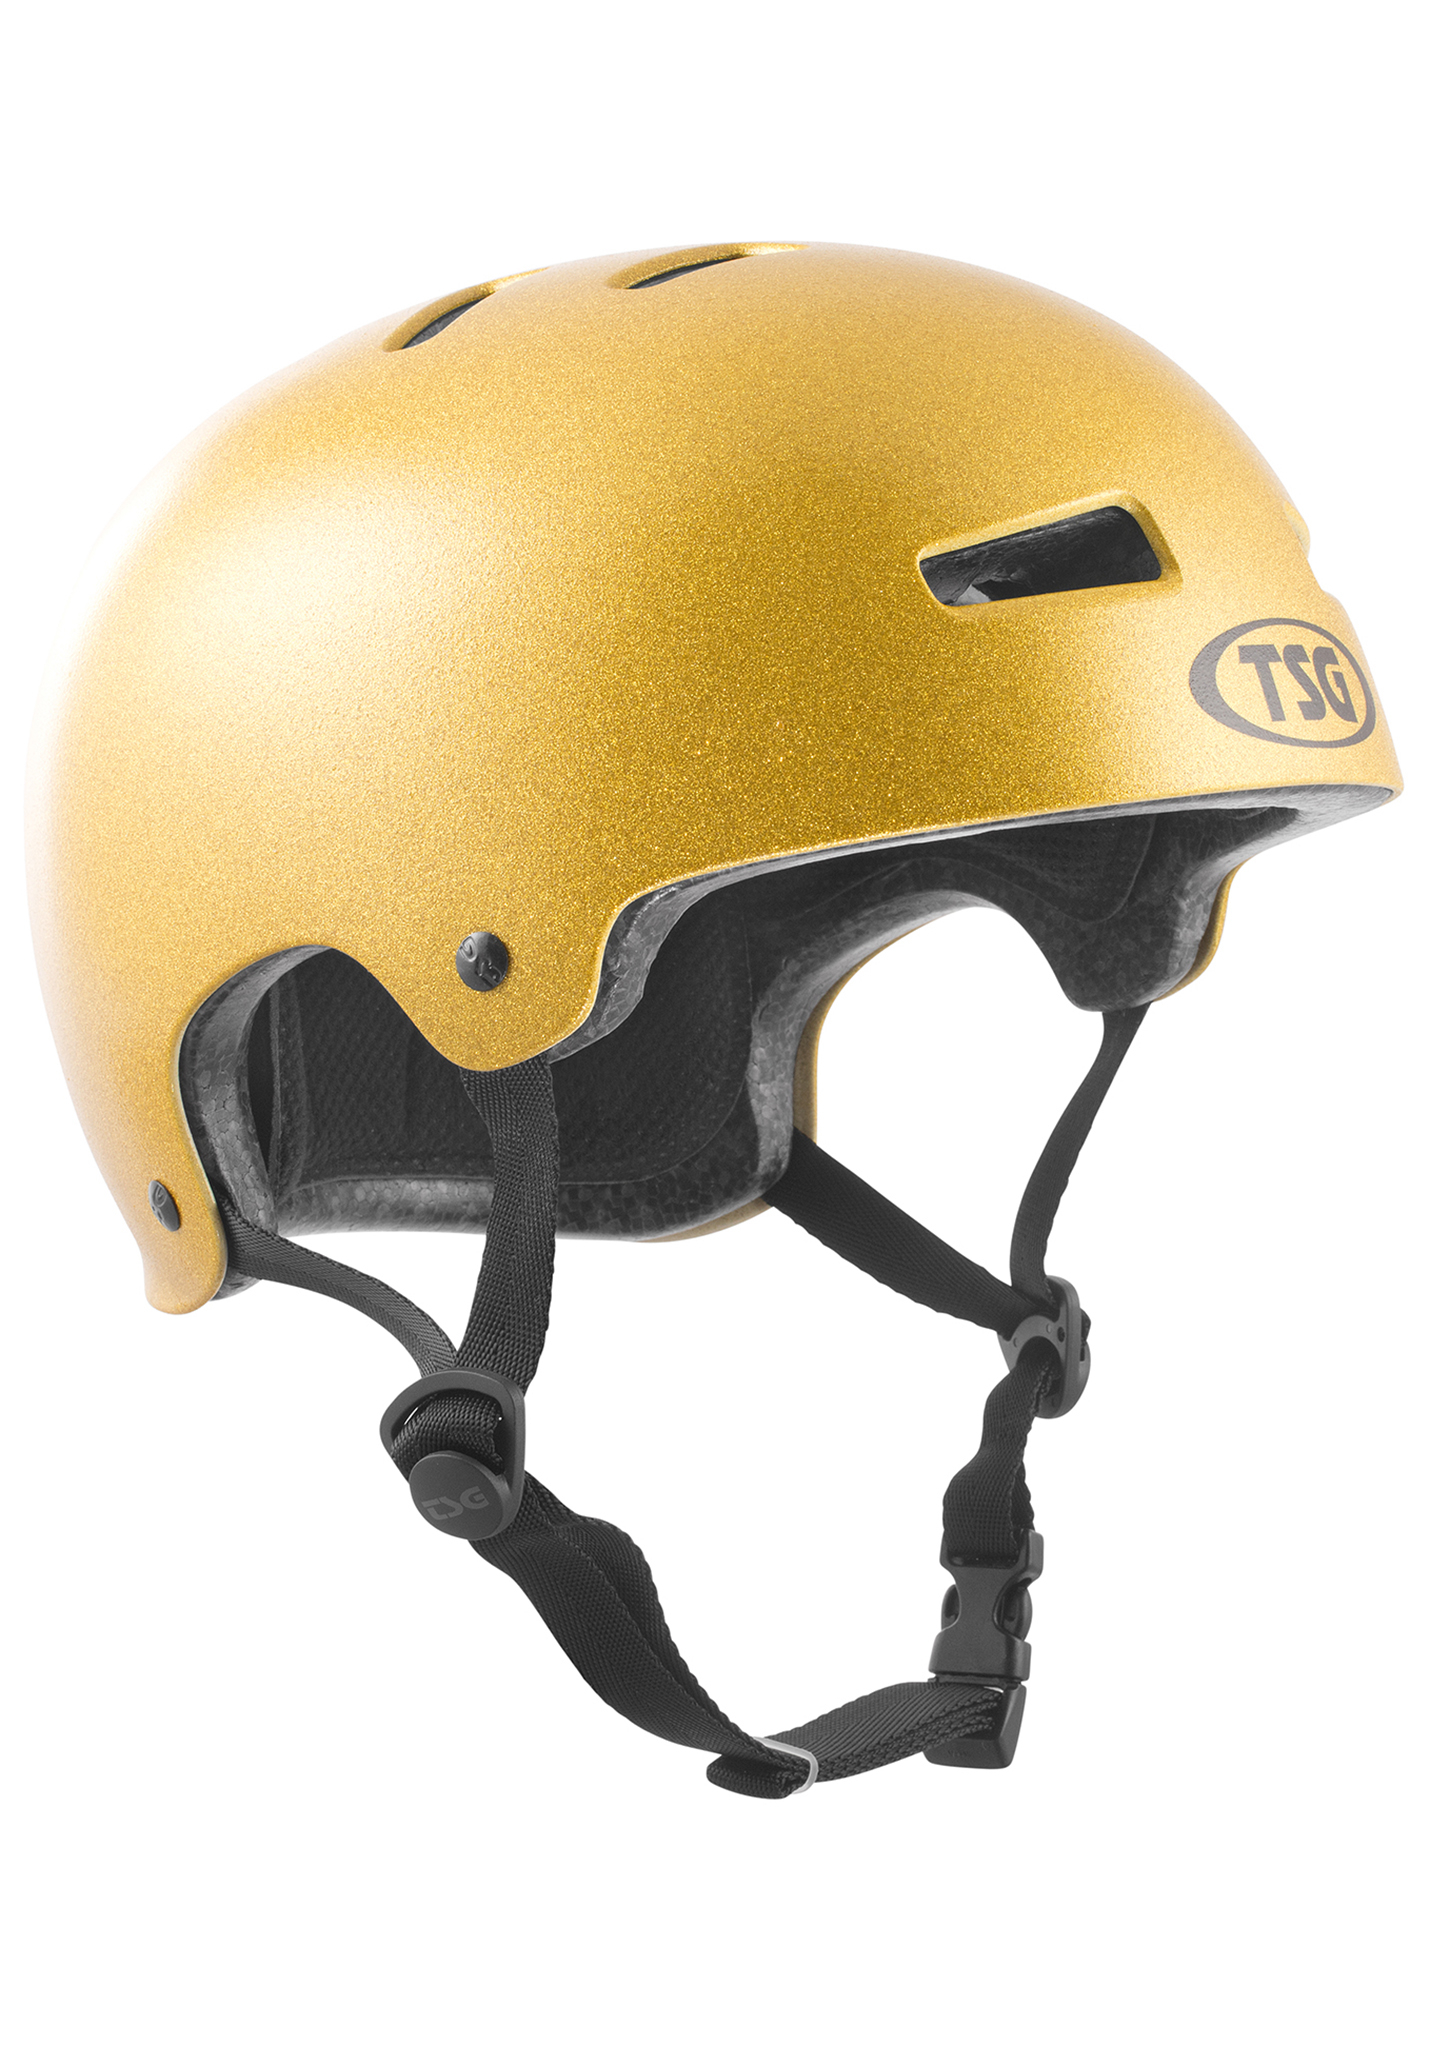 TSG Evolution Special Makeup Helm goldie S/M